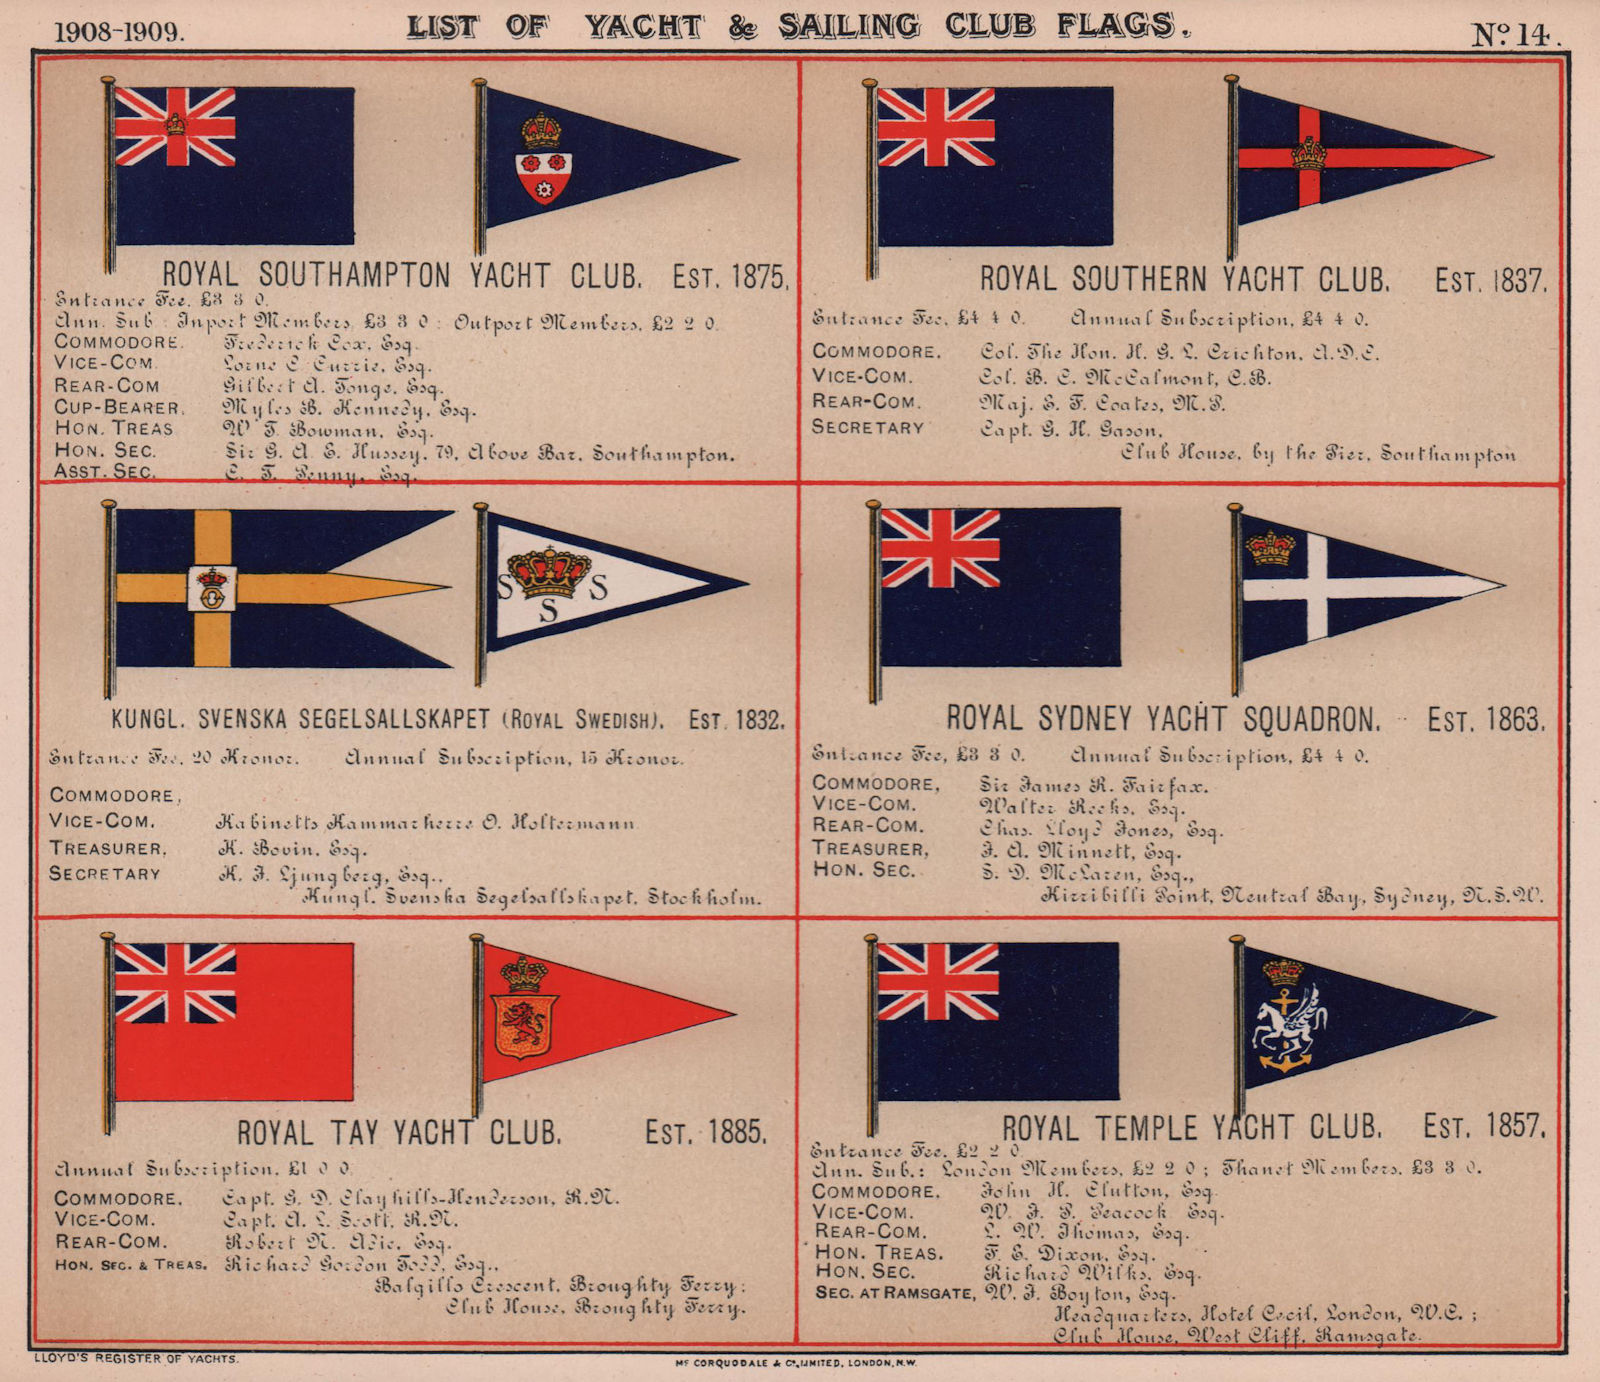 ROYAL YACHT & SAILING CLUB FLAGS S-T Southampton Swedish Sydney Tay Temple 1908